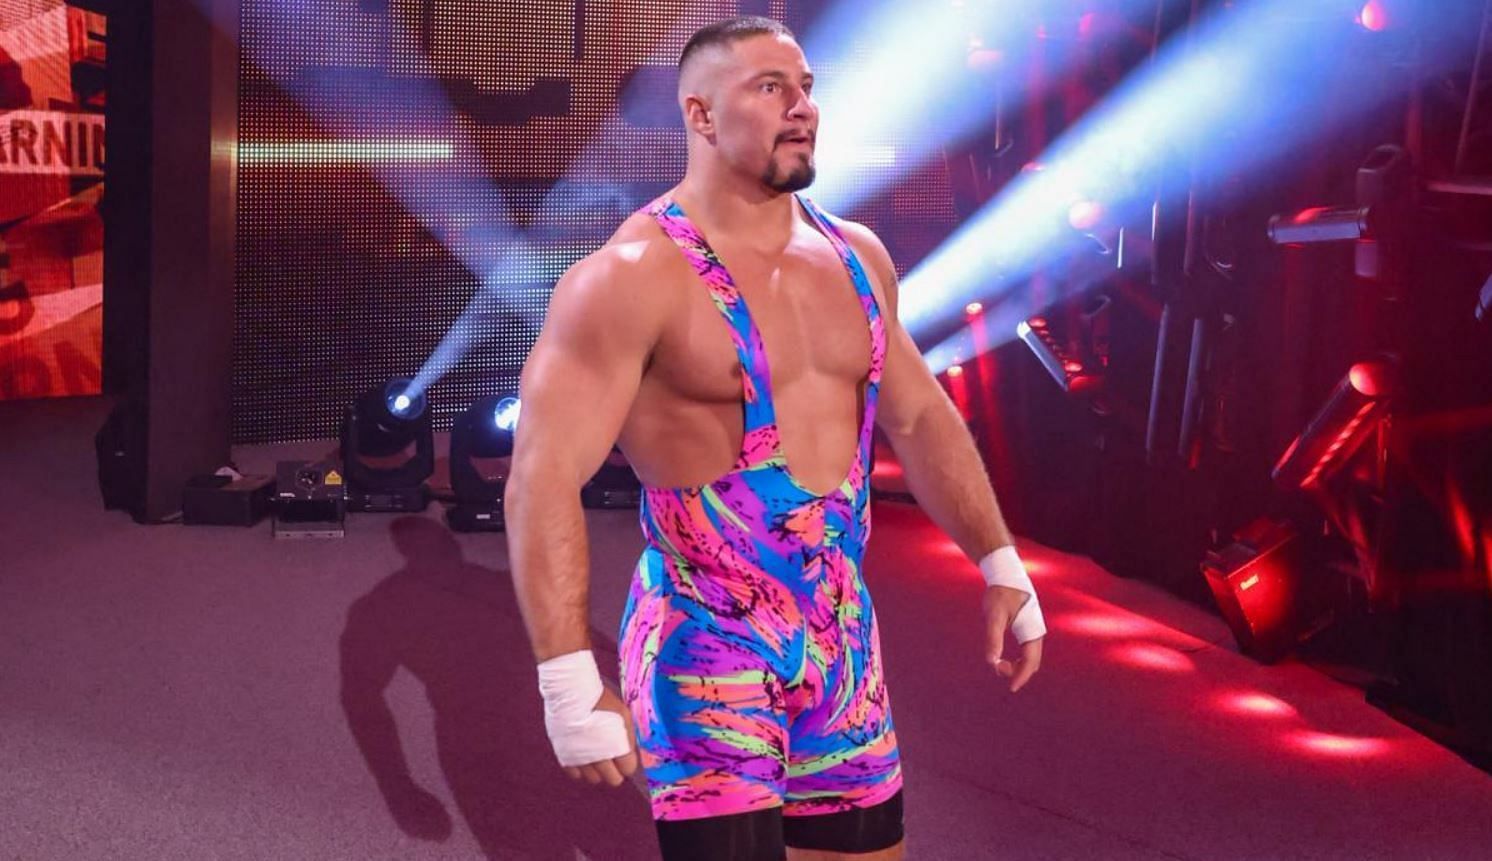 Current NXT Champion Bron Breakker